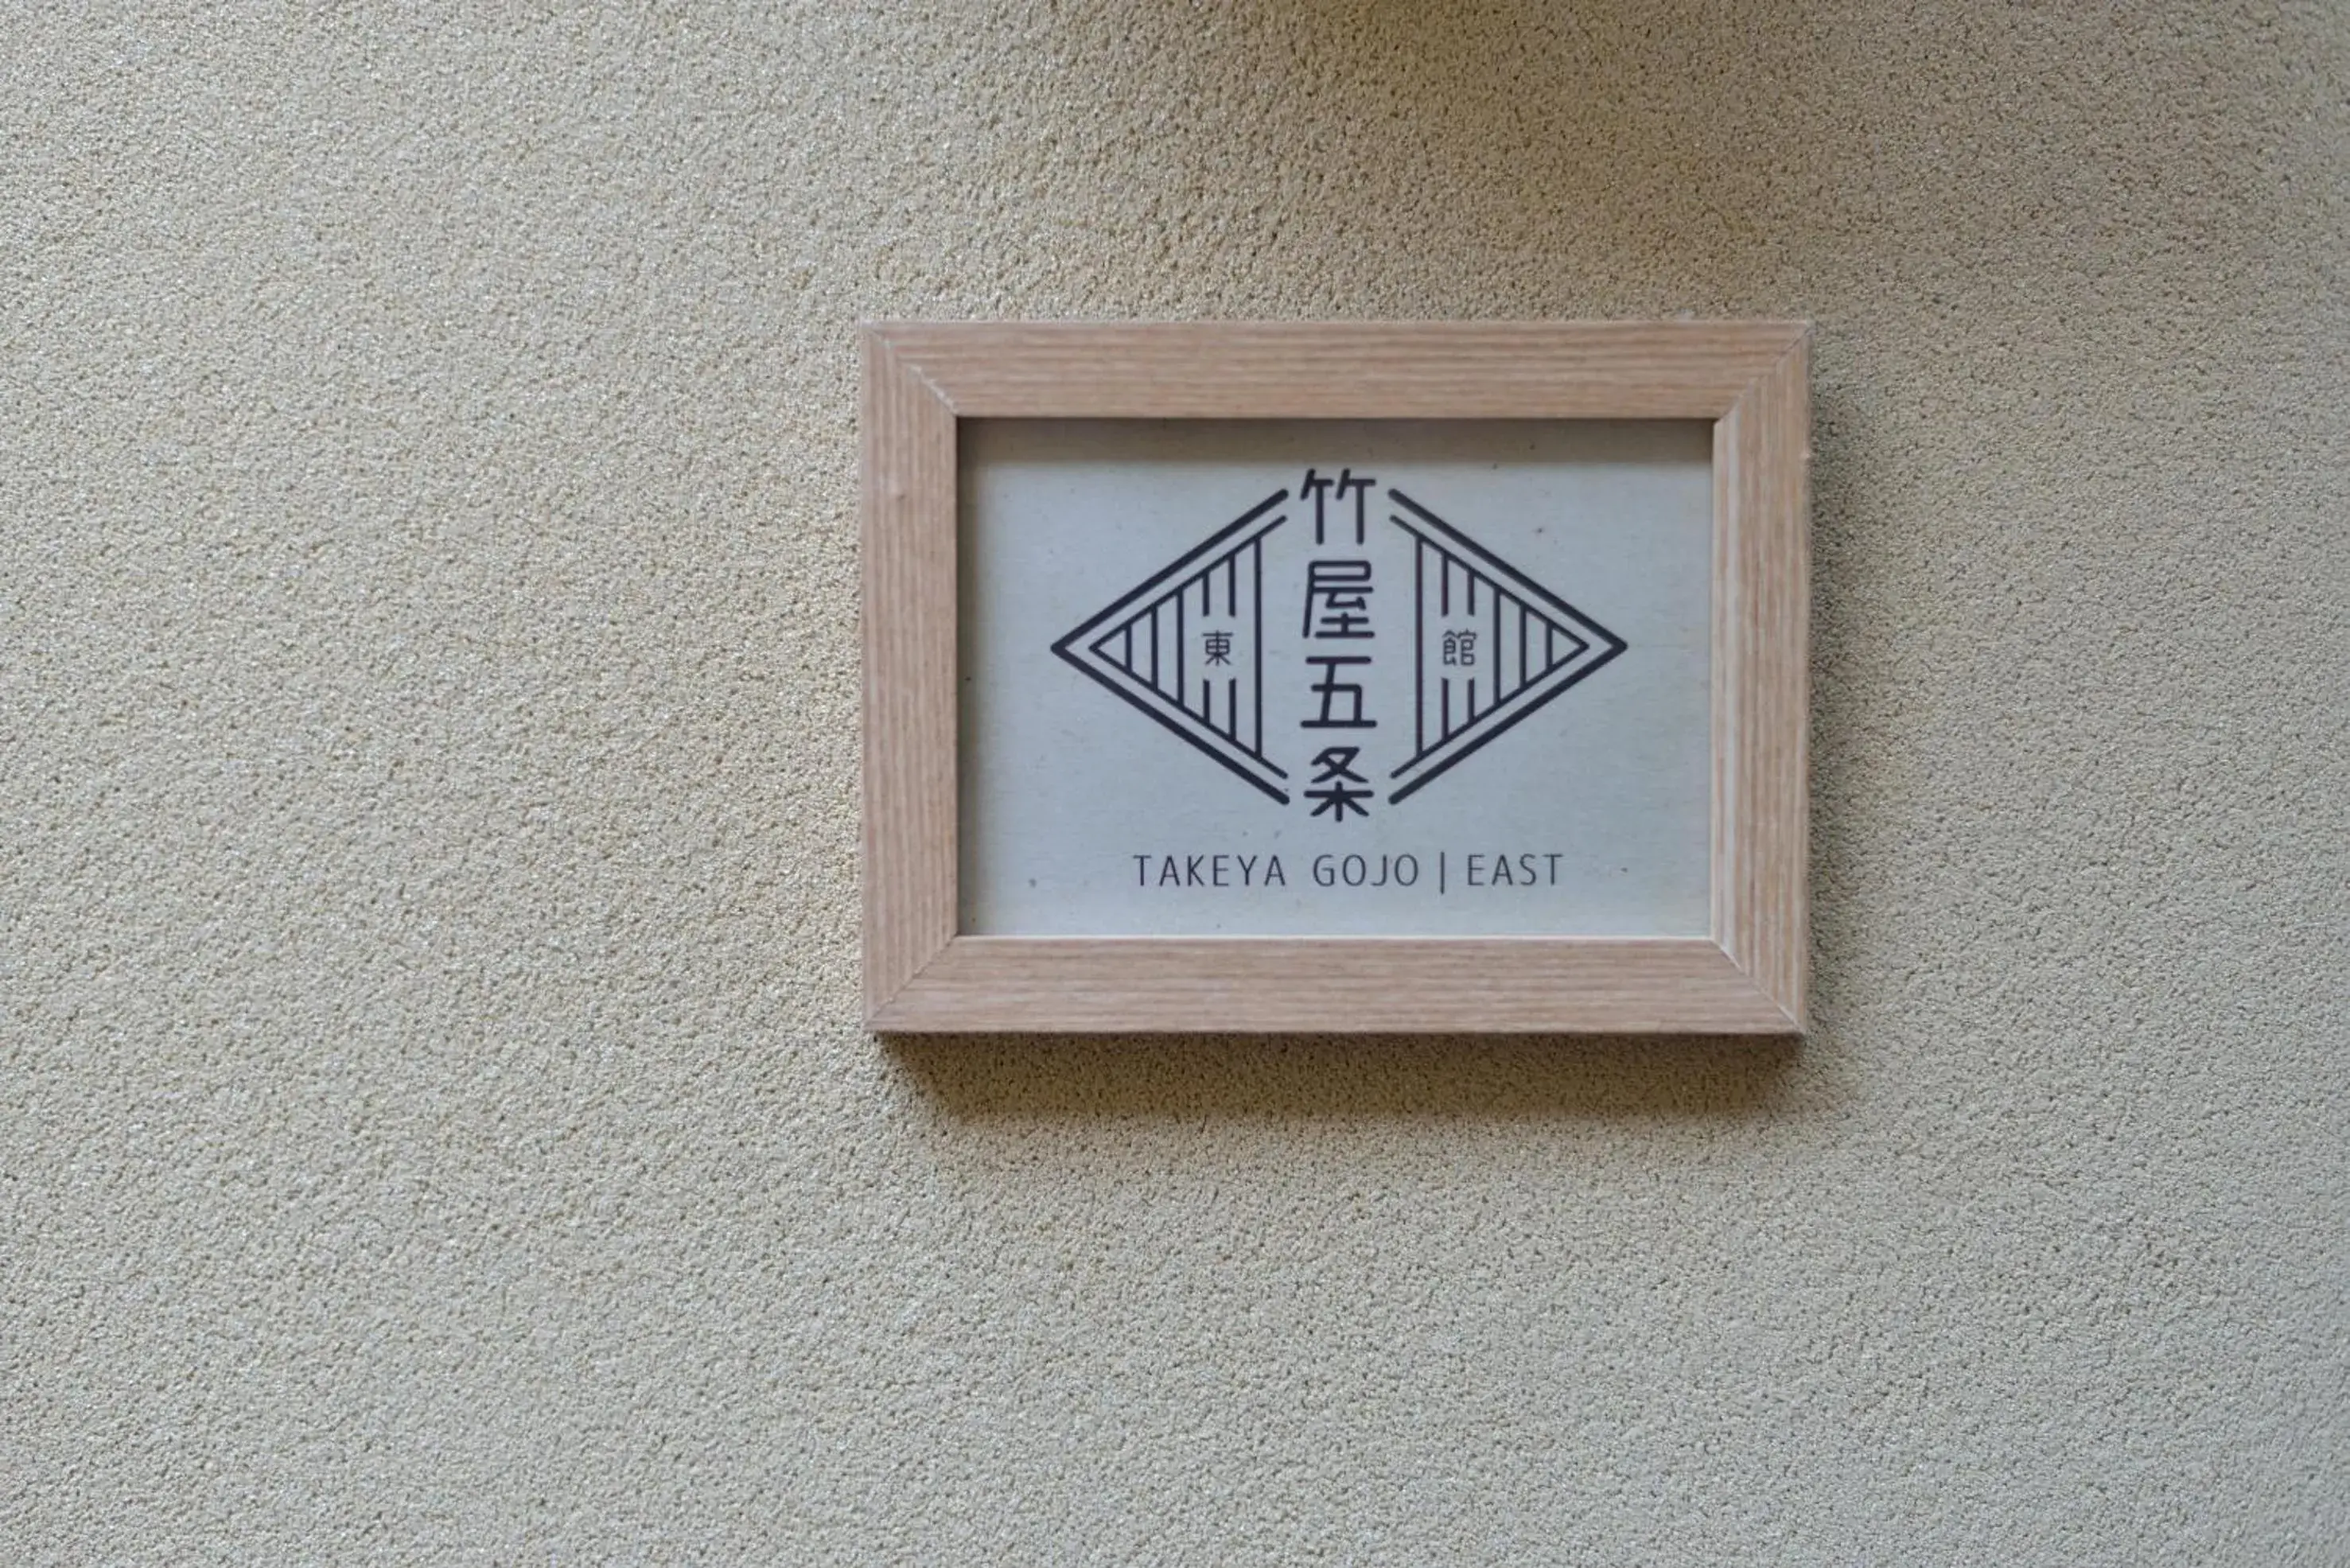 Property logo or sign, Logo/Certificate/Sign/Award in Takeya Gojo